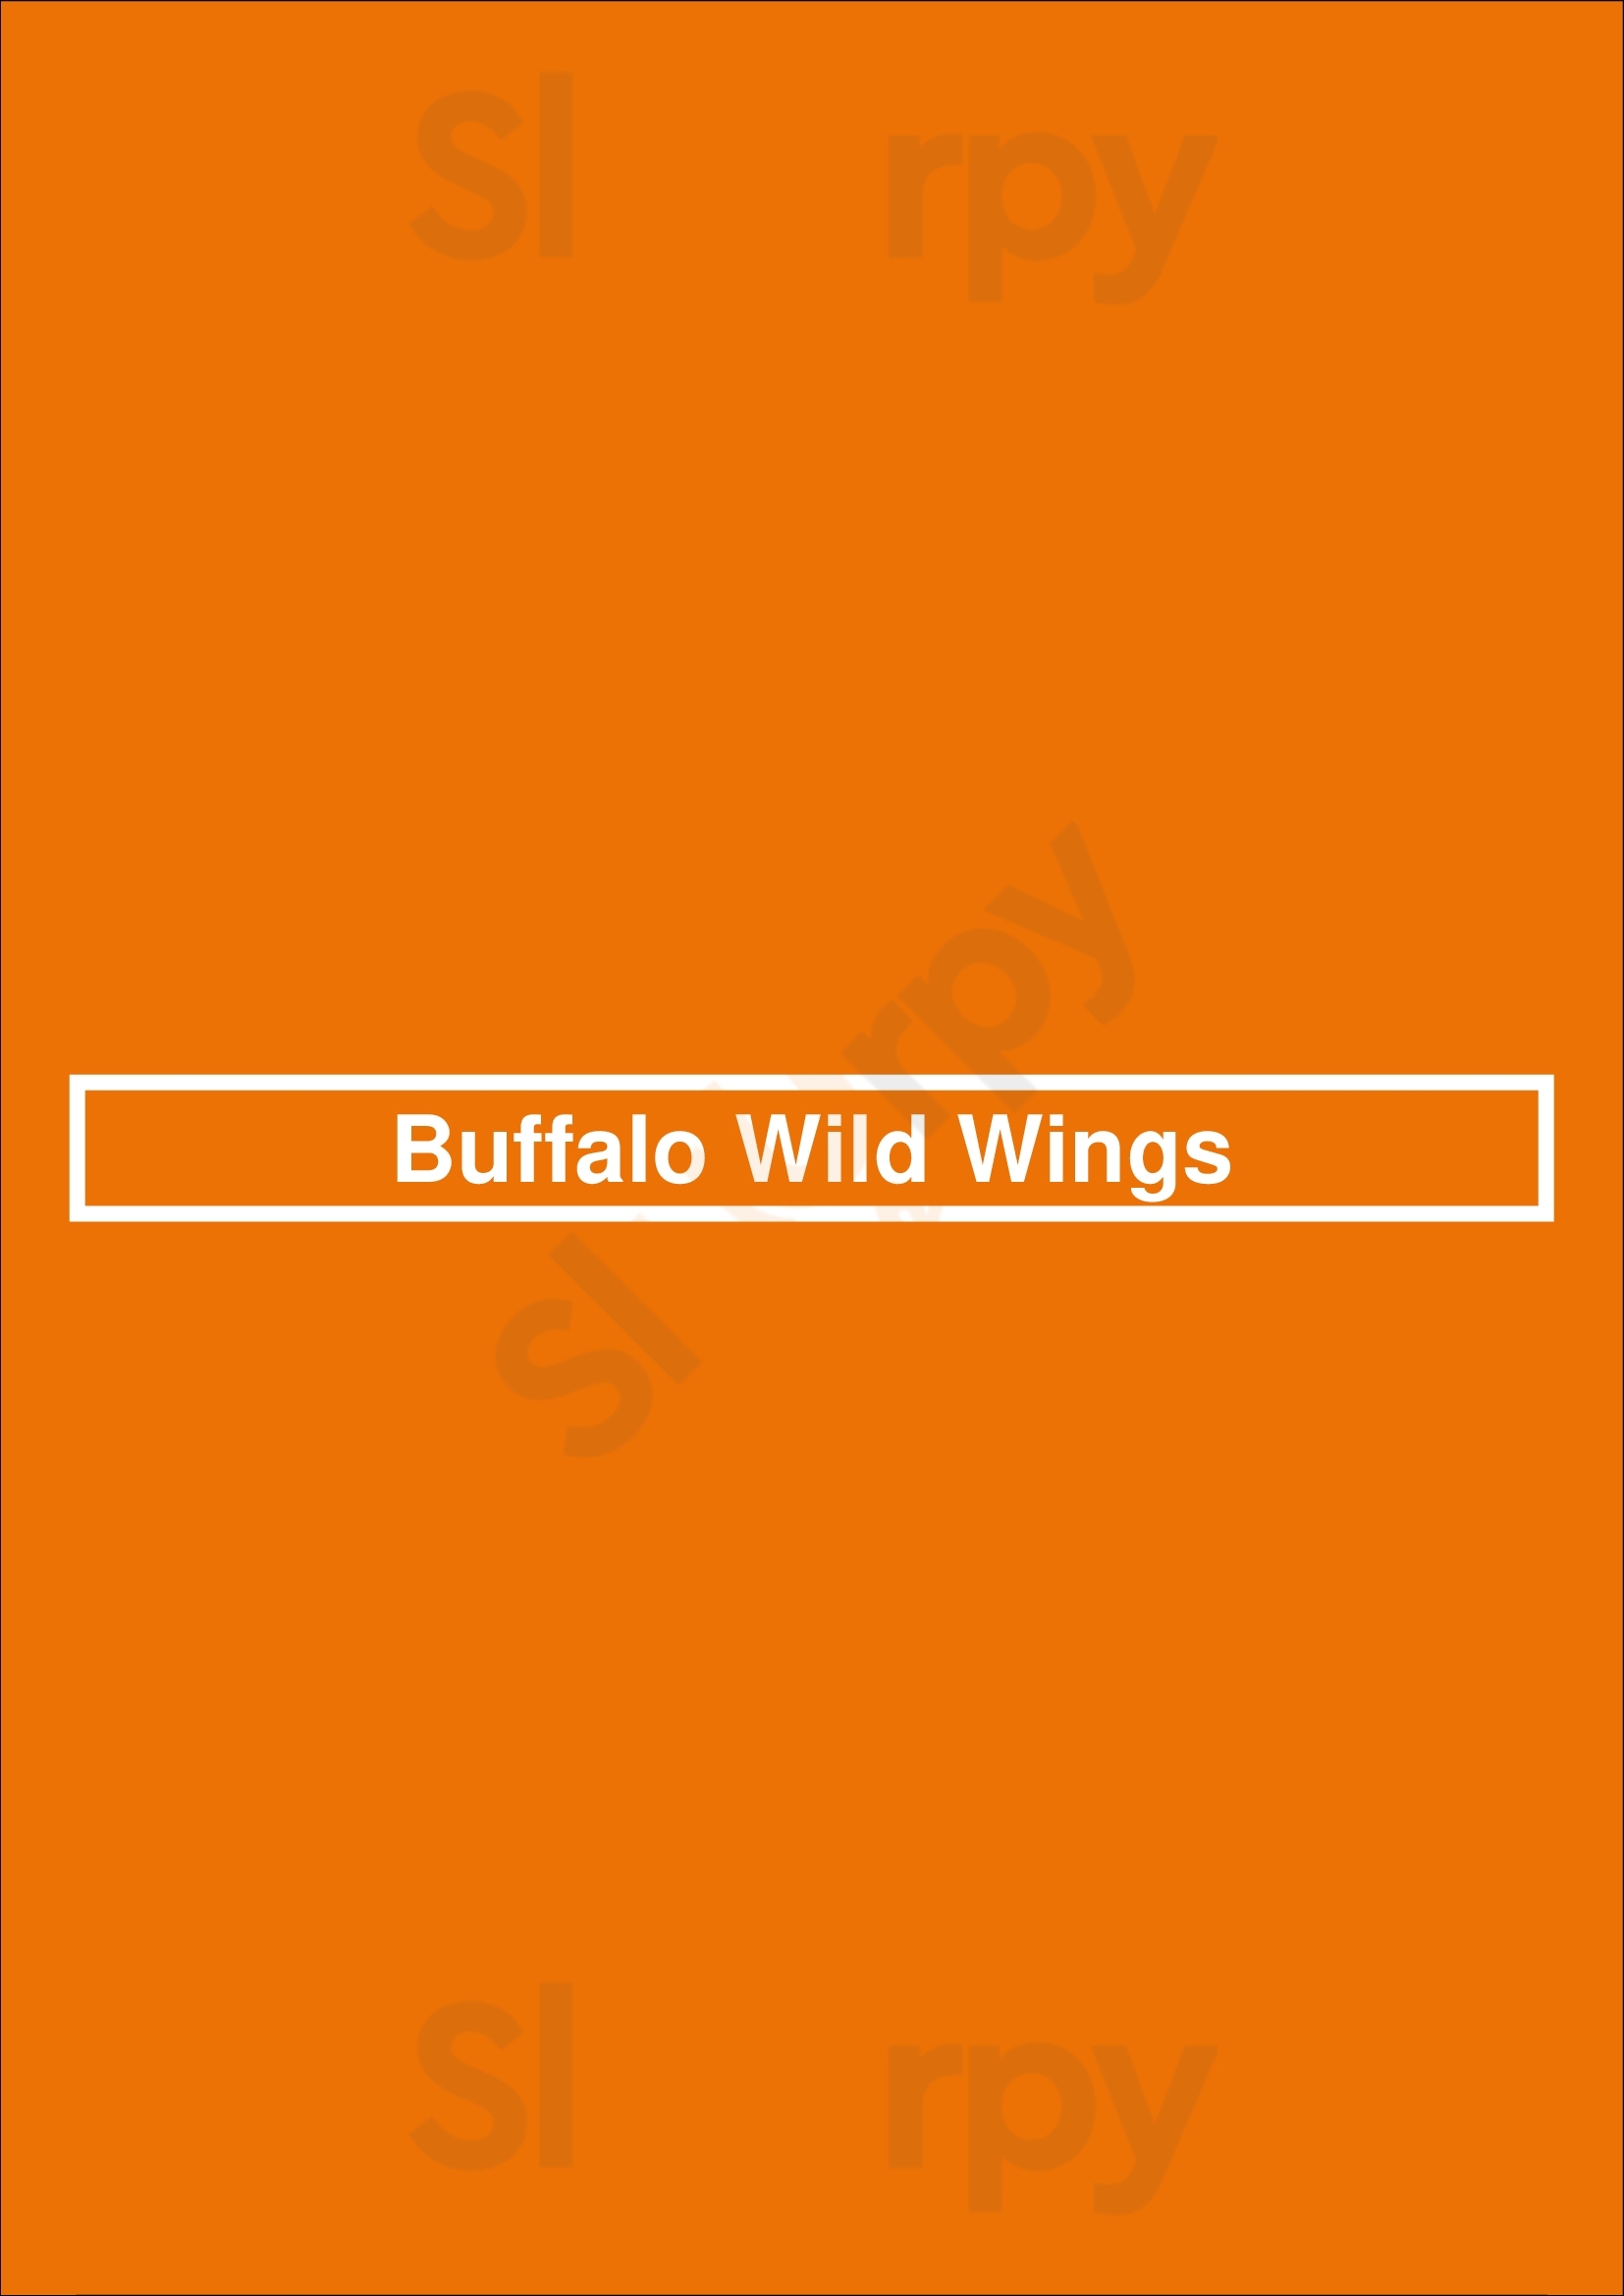 Buffalo Wild Wings Plano Menu - 1